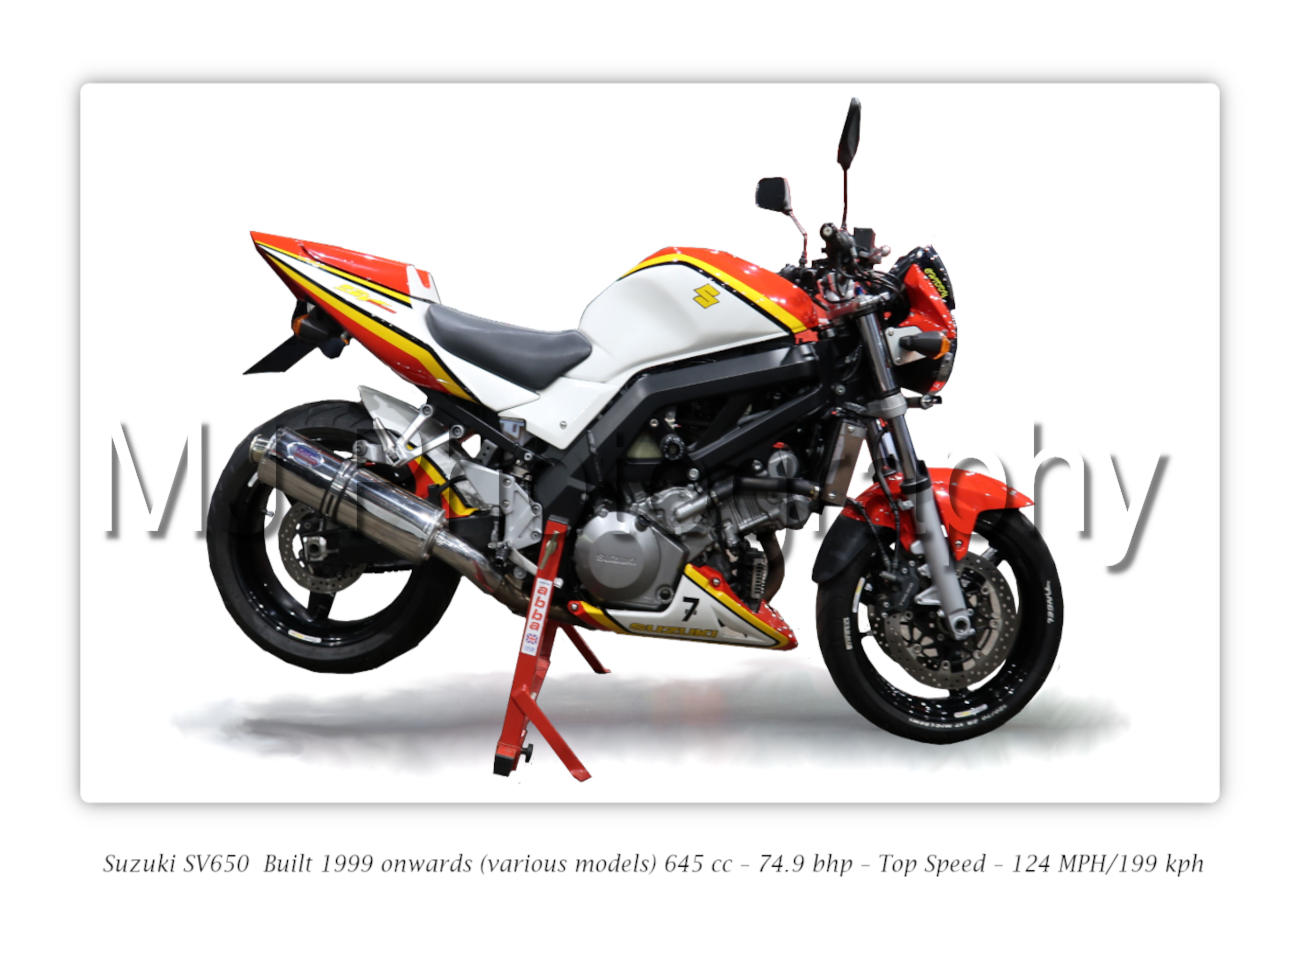 Suzuki SV650 Motorcycle - A3/A4 Size Print Poster